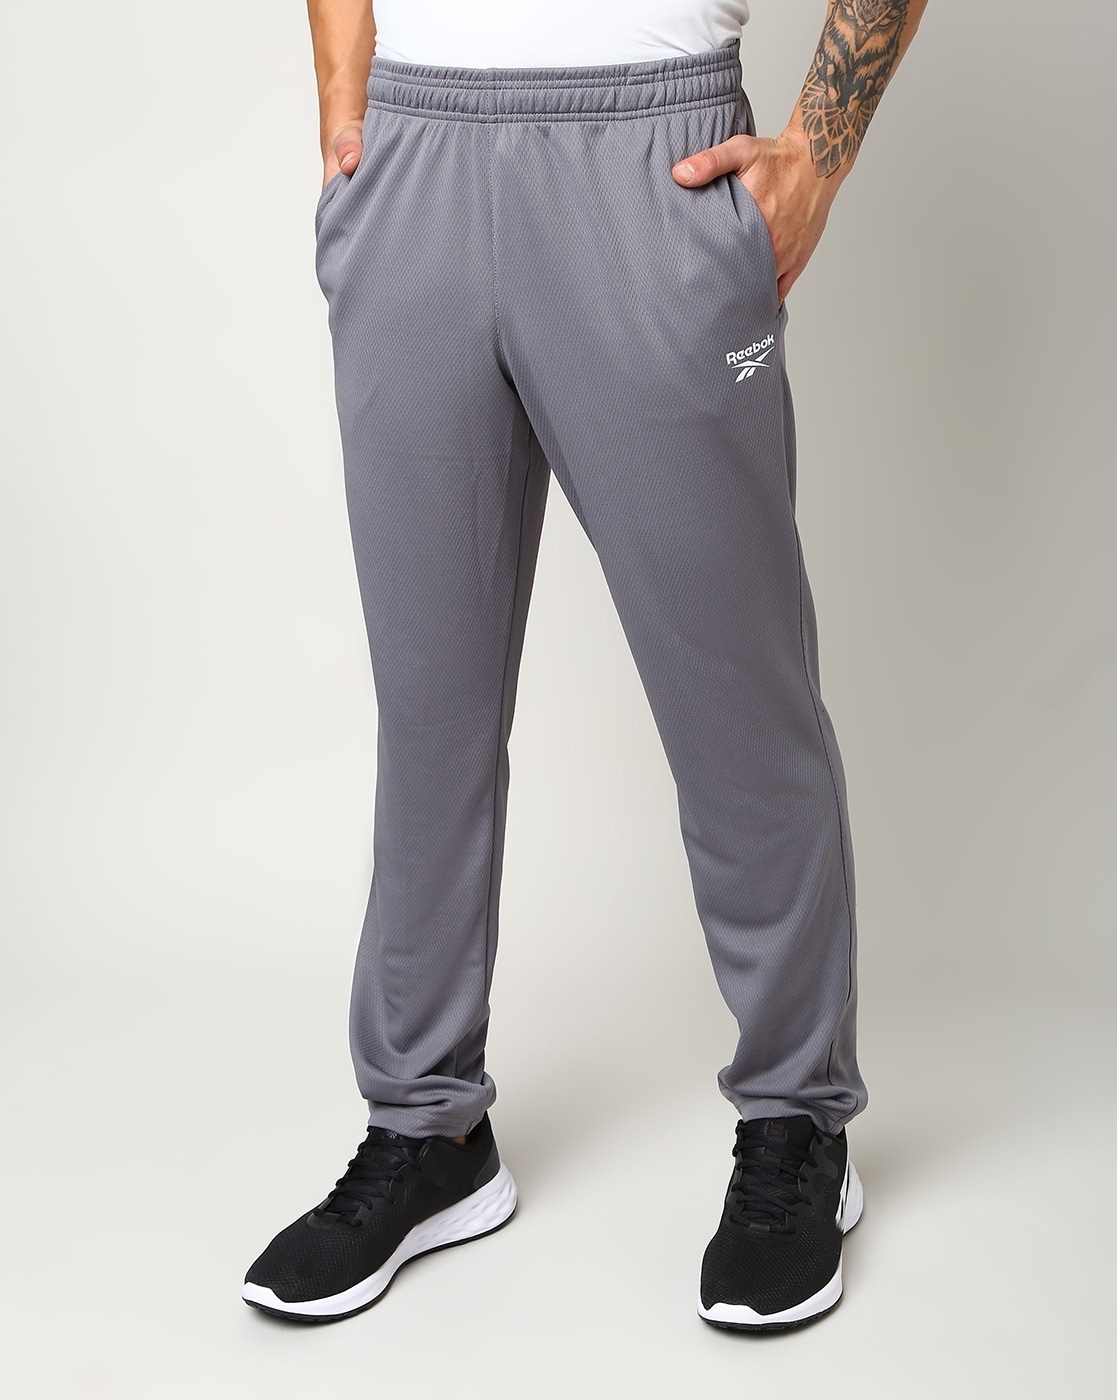 Buy Grey Trousers & Pants for Men Reebok Online | Ajio.com